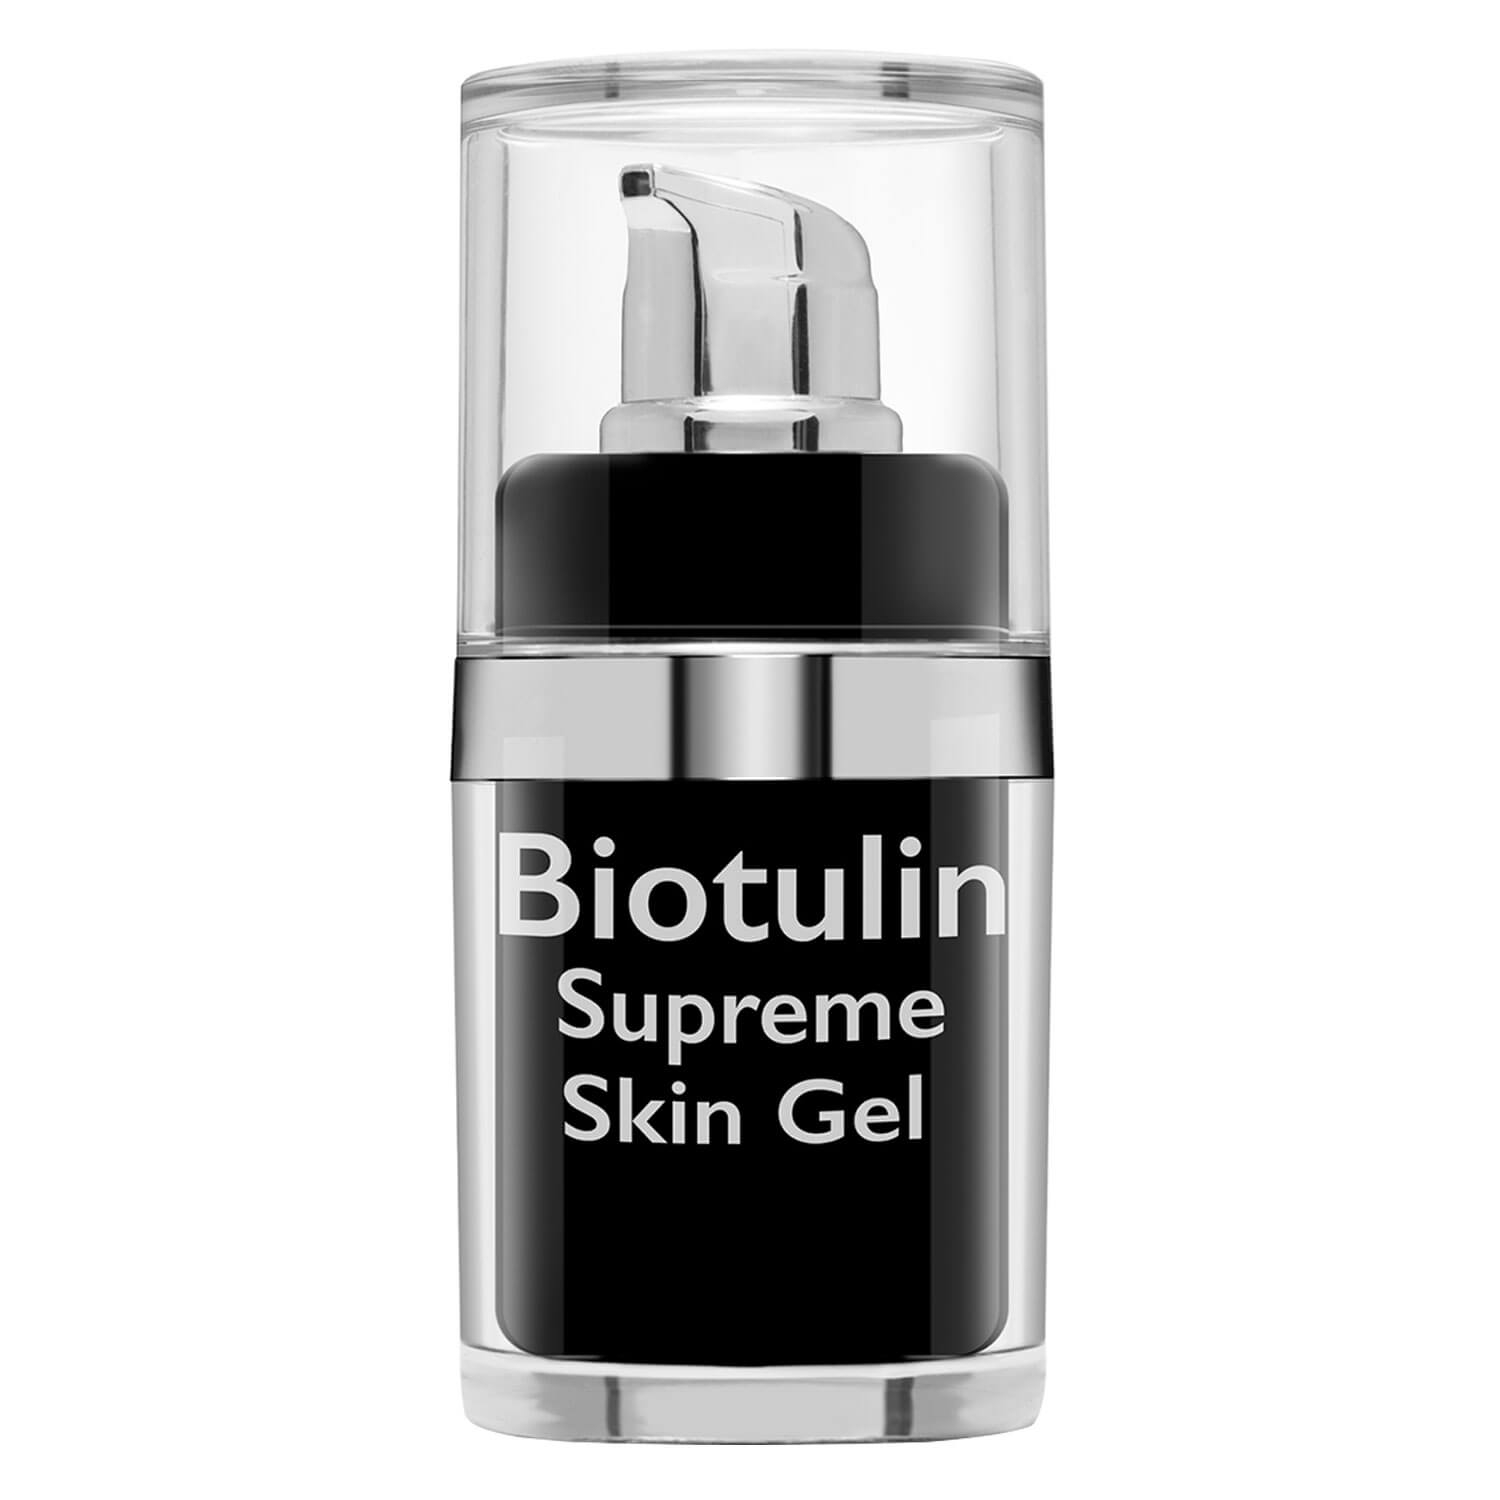 Product image from Biotulin - Biotulin Supreme Skin Gel